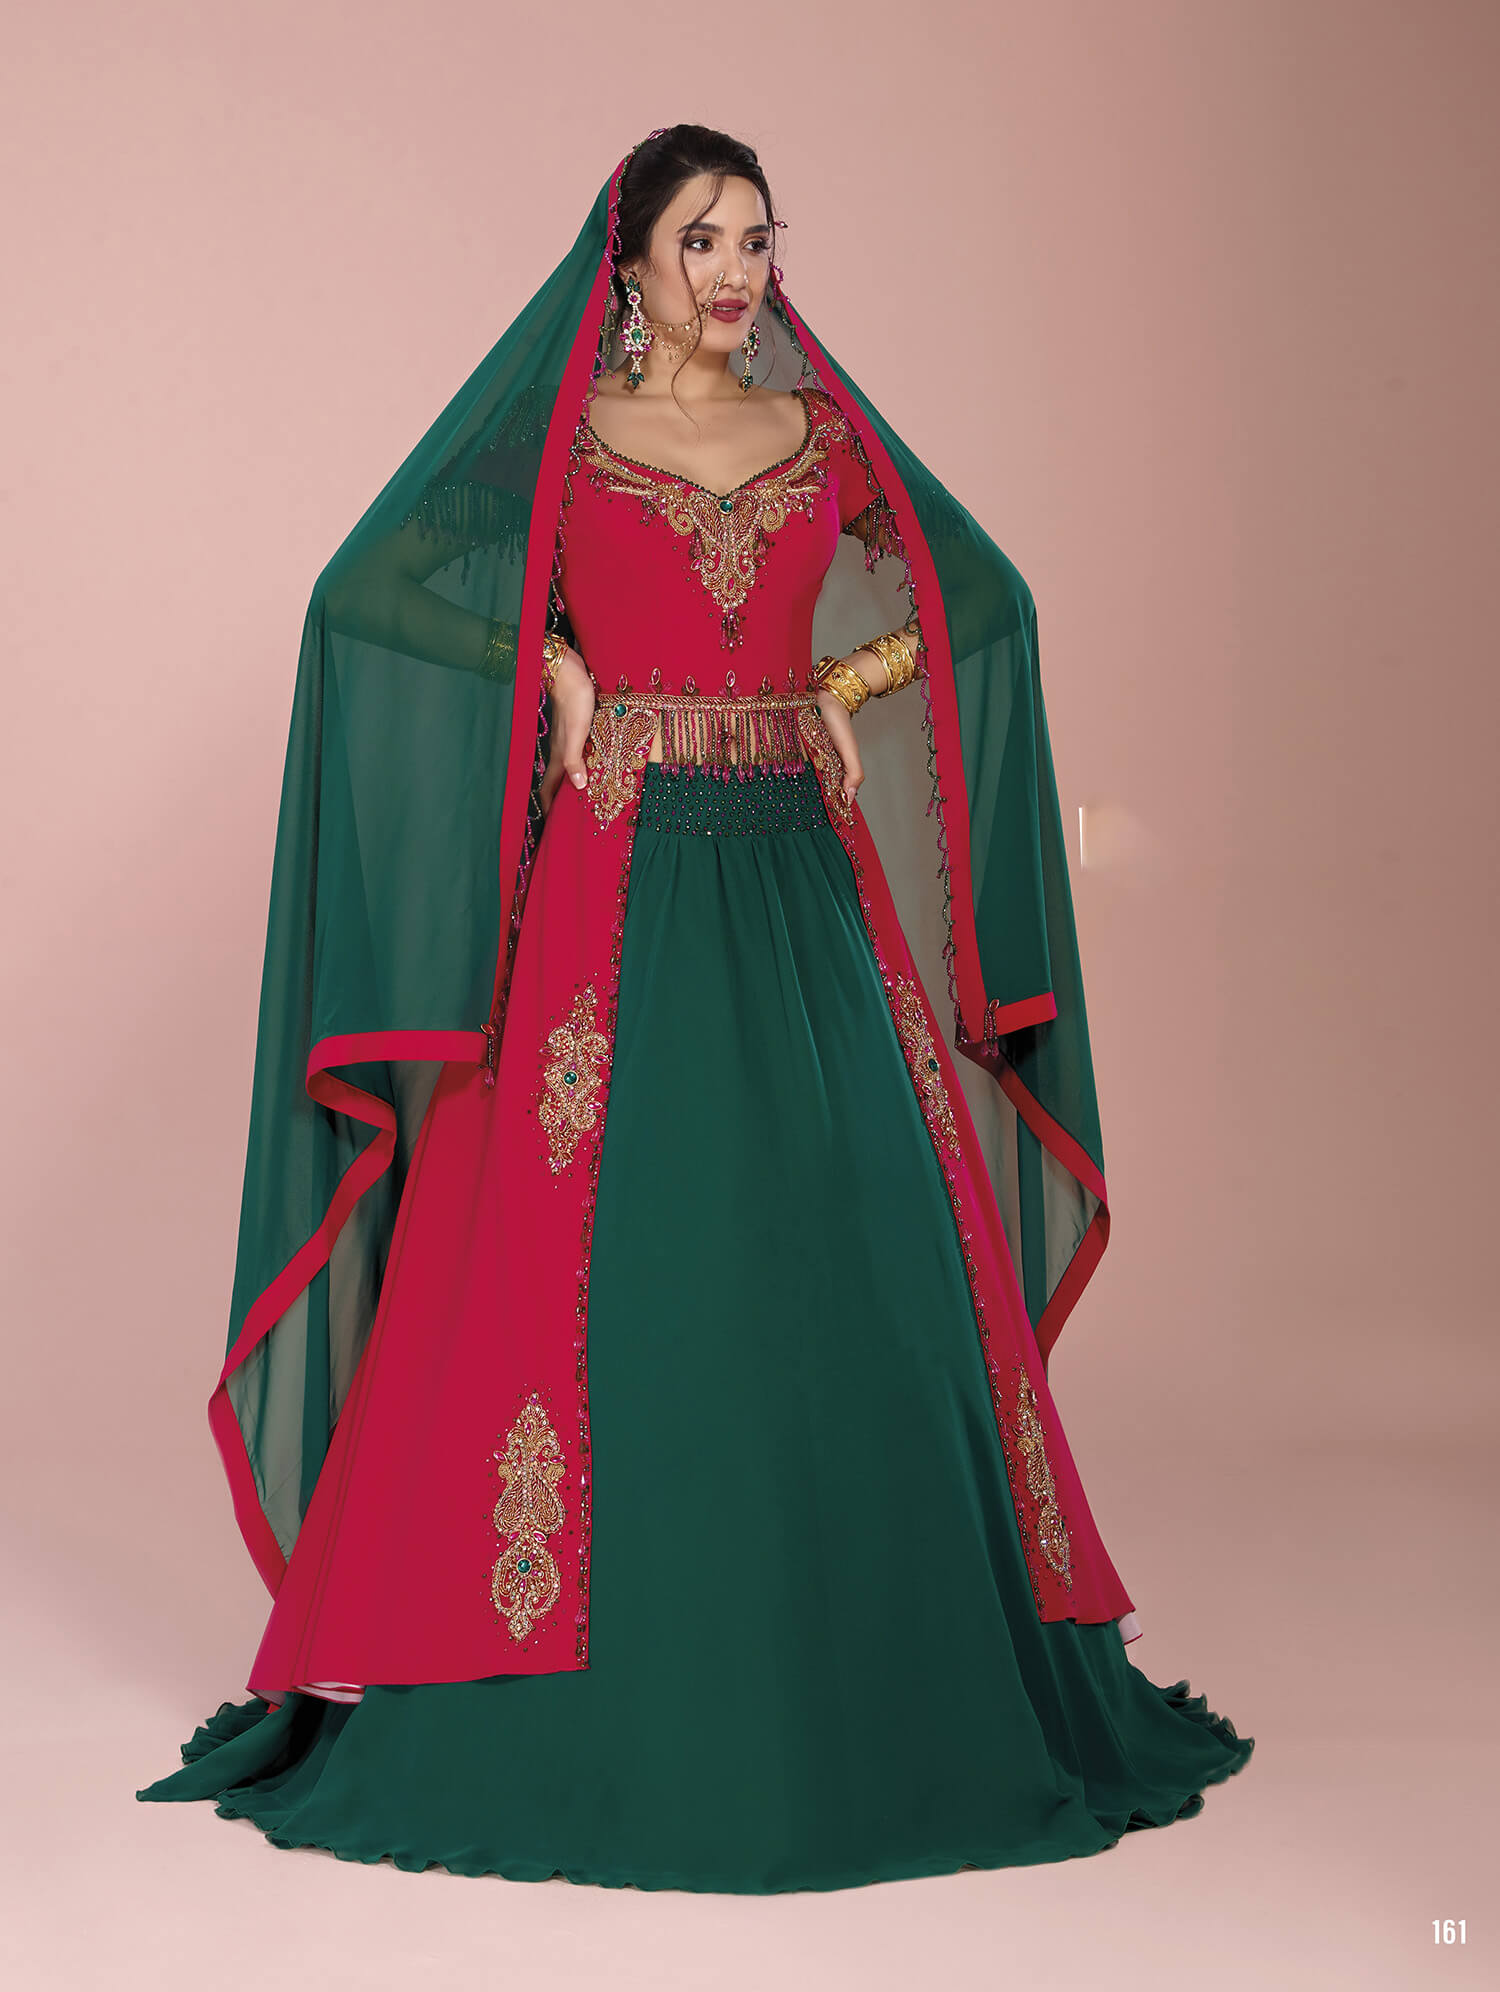 Indian Model Red Green Henna Dress